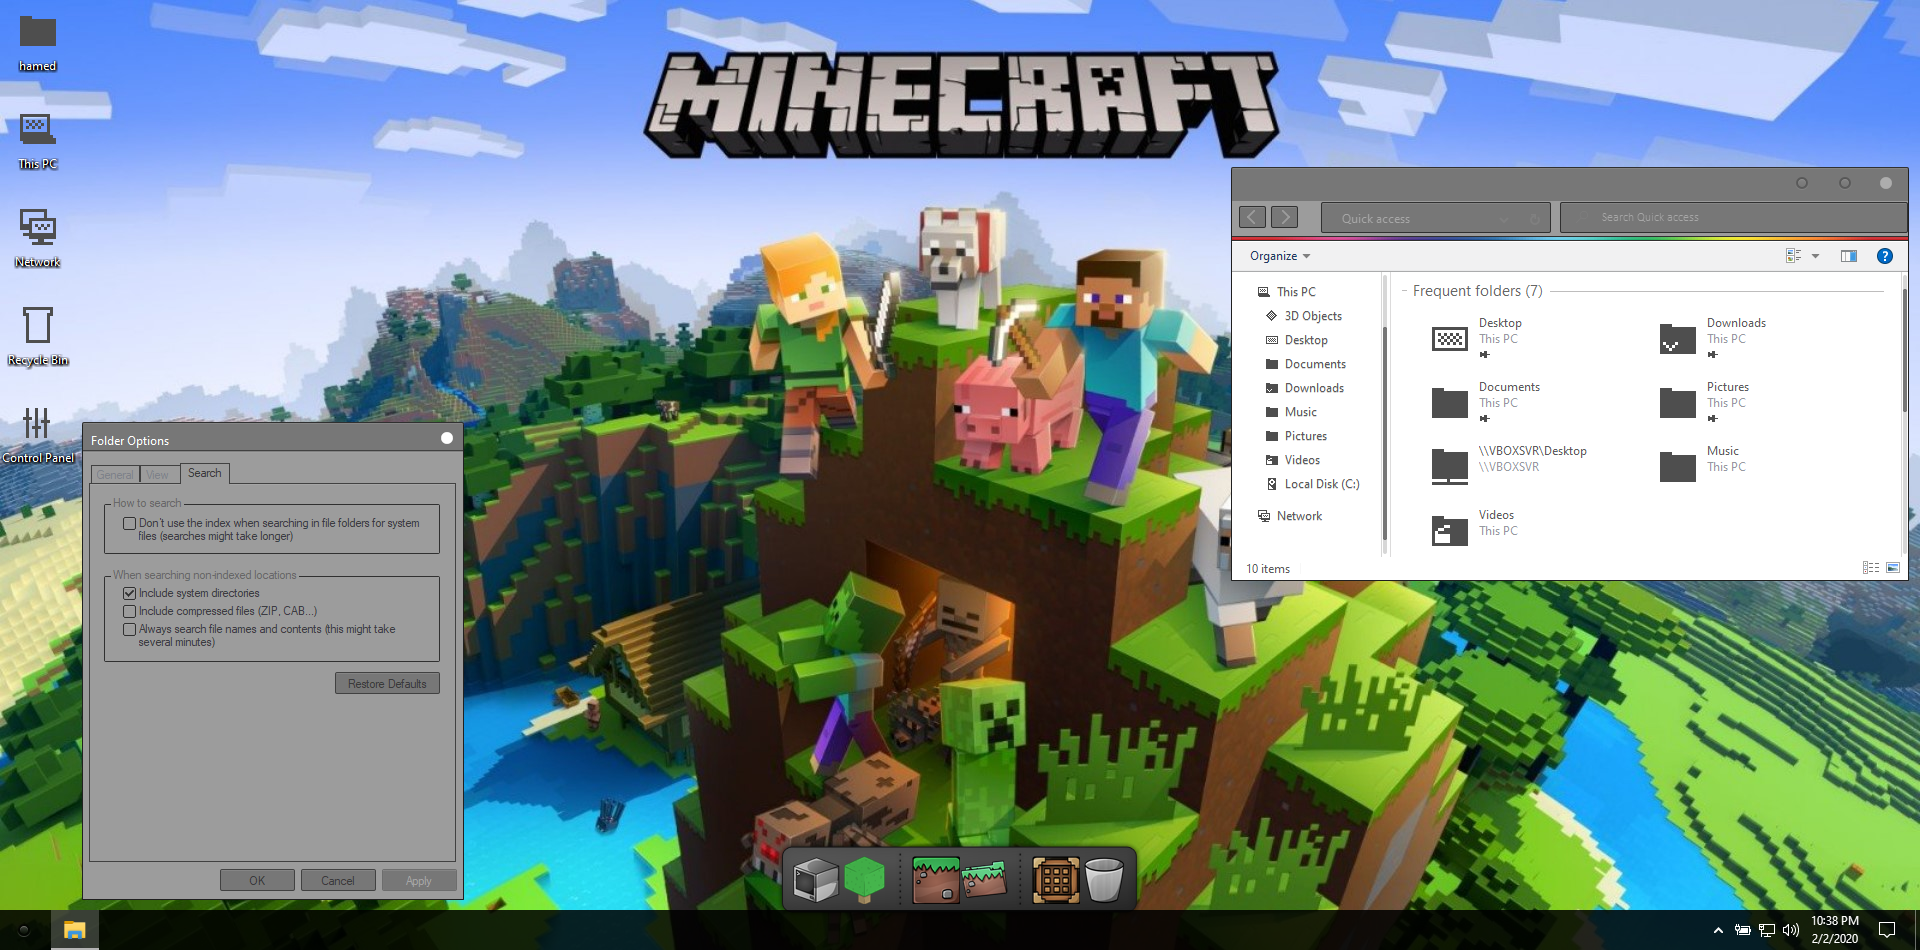 Minecraft Skin Pack for Windows 10 19H2